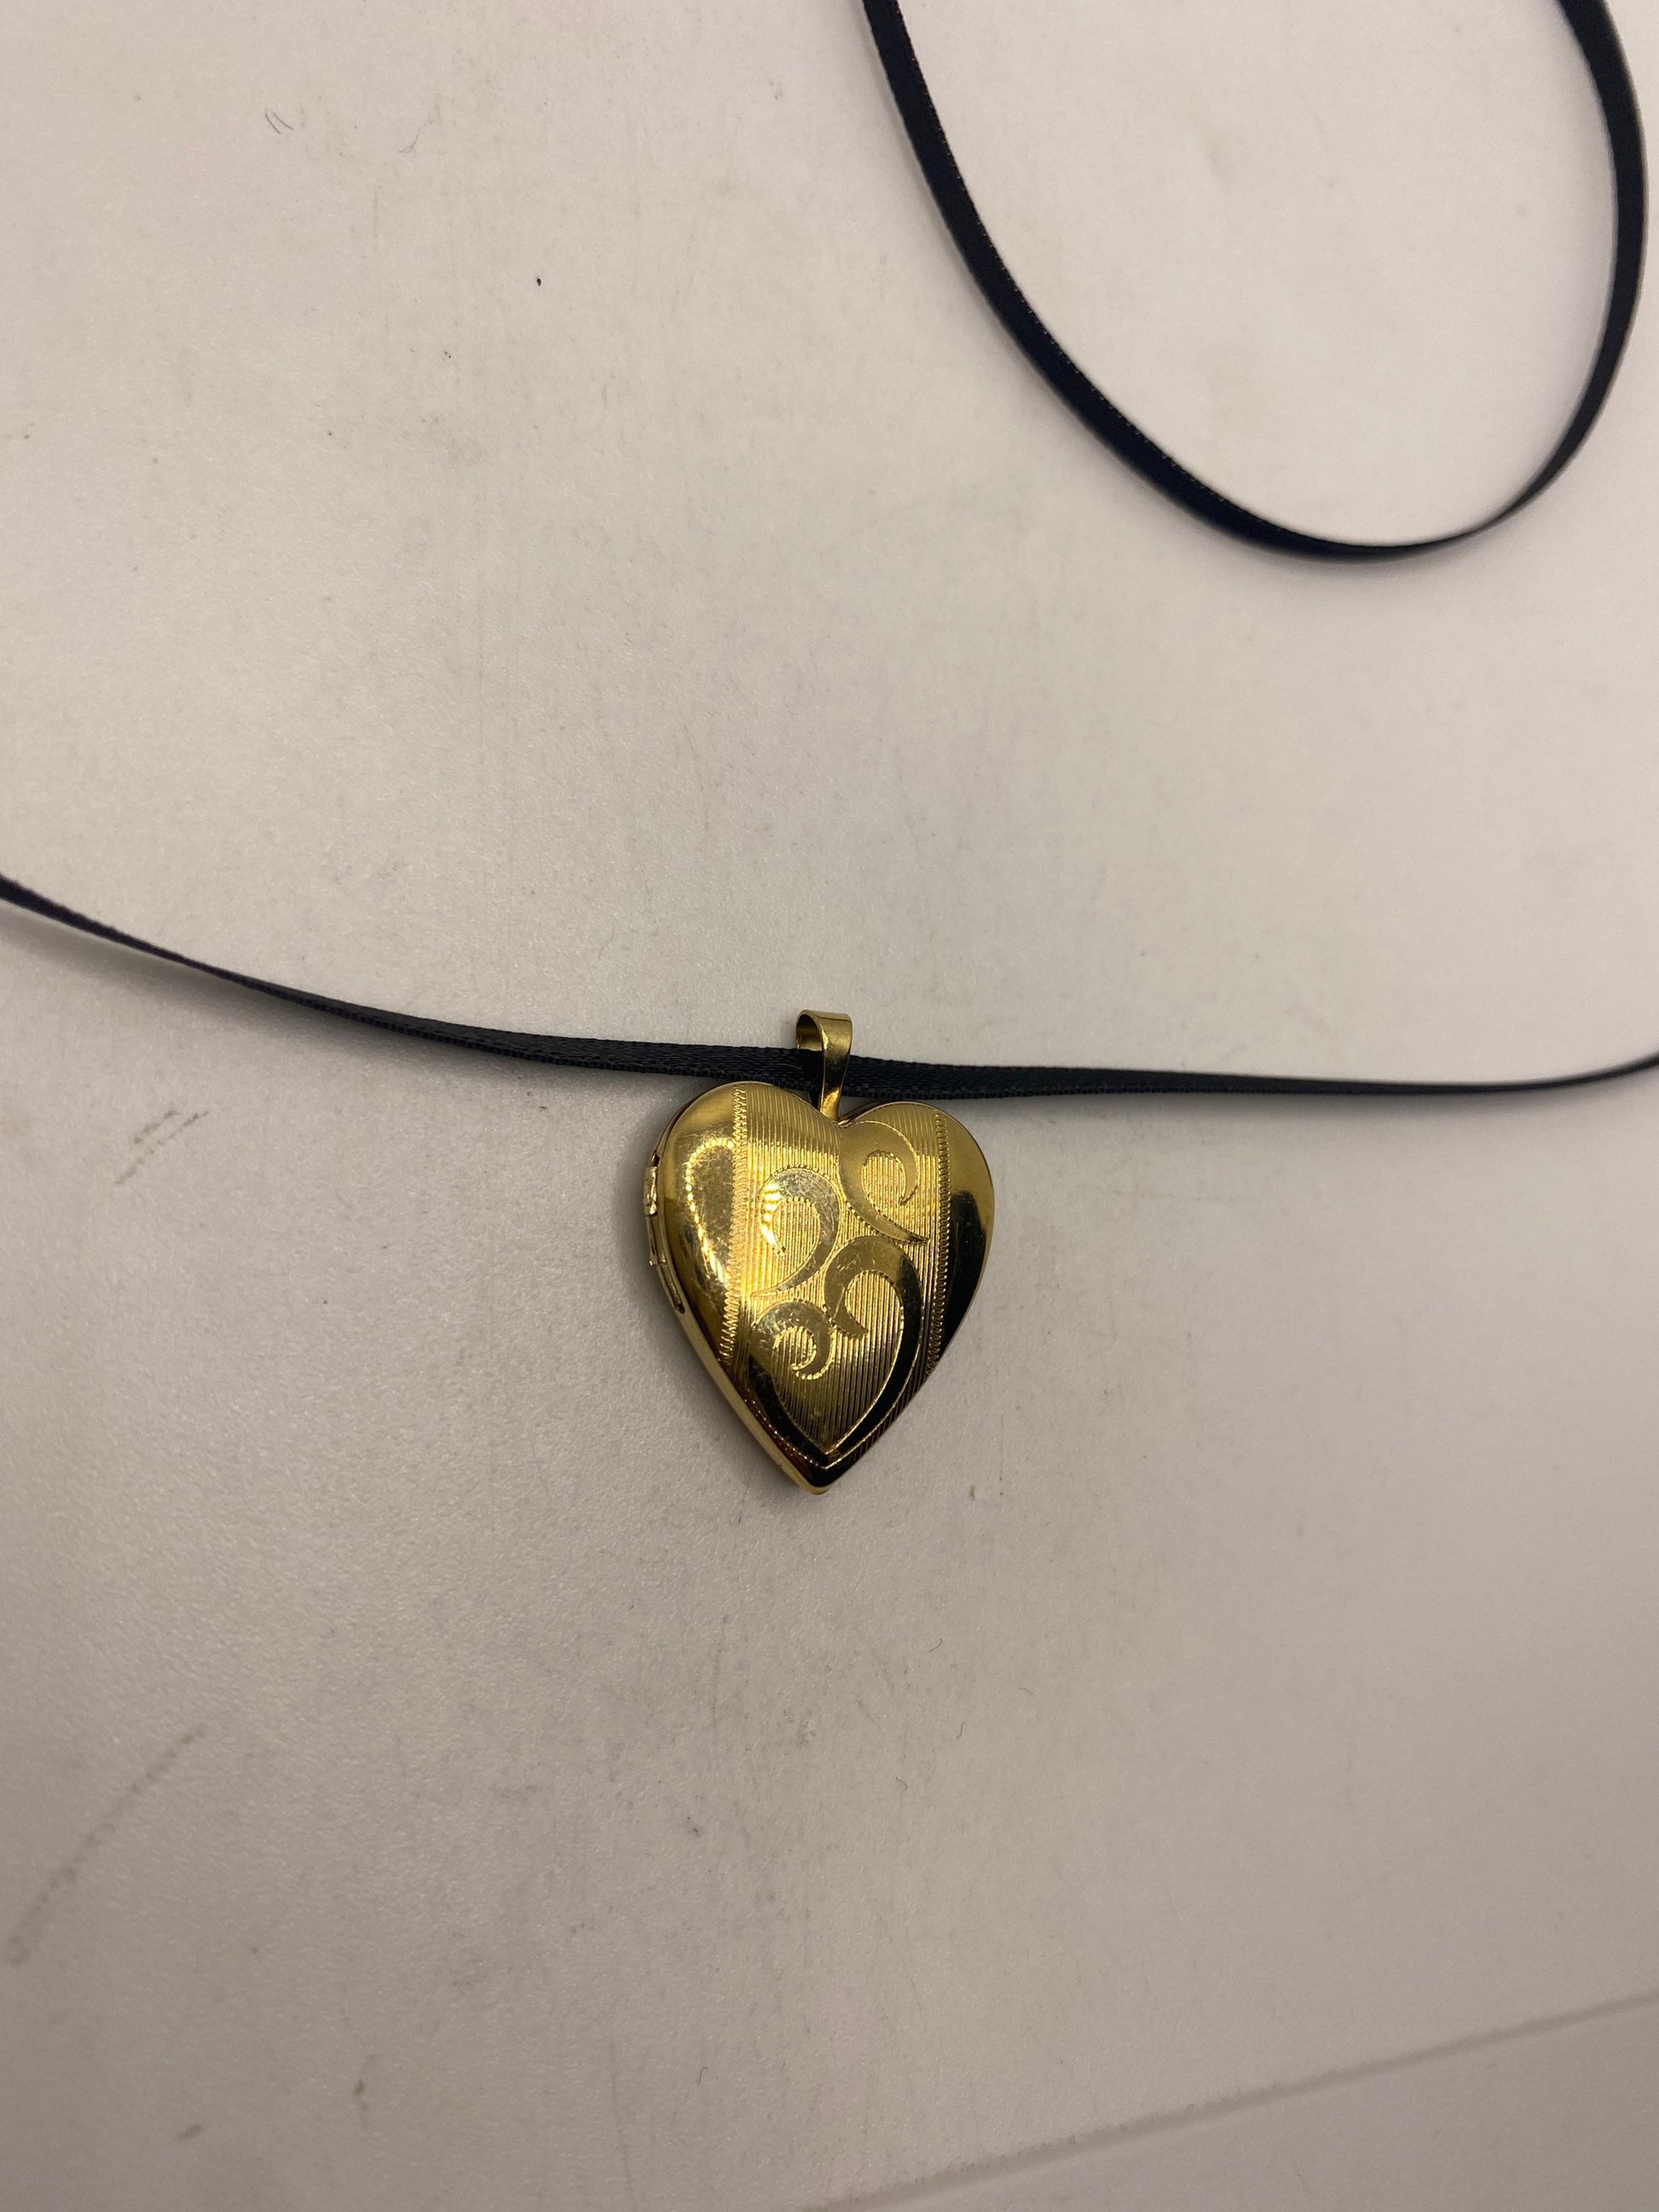 Vintage Gold Locket | Tiny Heart 9k Gold Filled Pendant Photo Memory Charm Engraved Etched Design | Choker Necklace